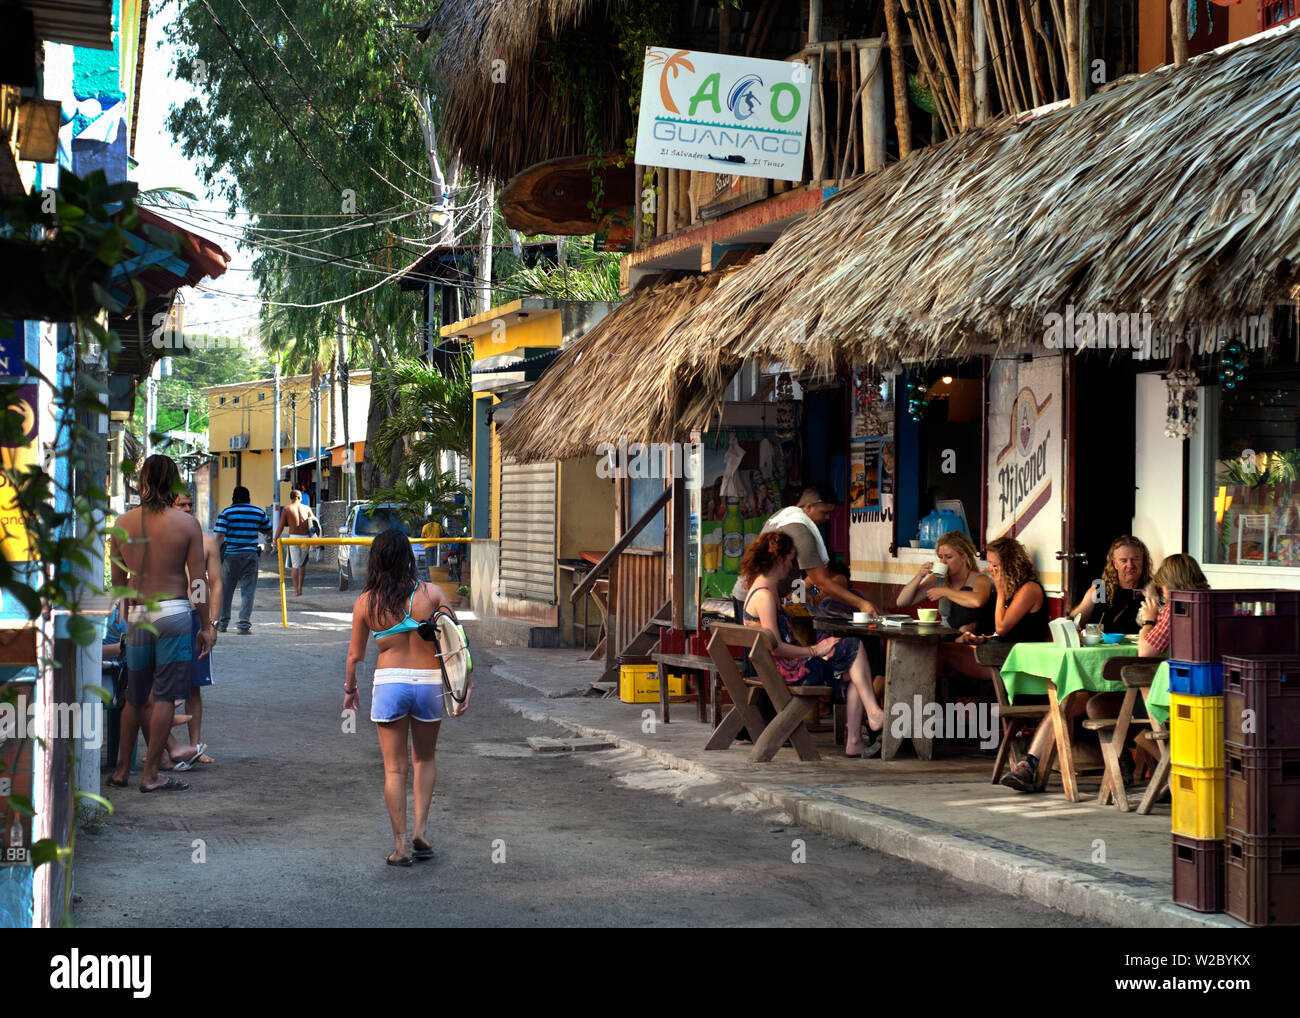 Playa El Tunco, El Salvador, Downtown Dining, Pacific Ocean Beach Resort, beliebt bei Surfern Stockfoto